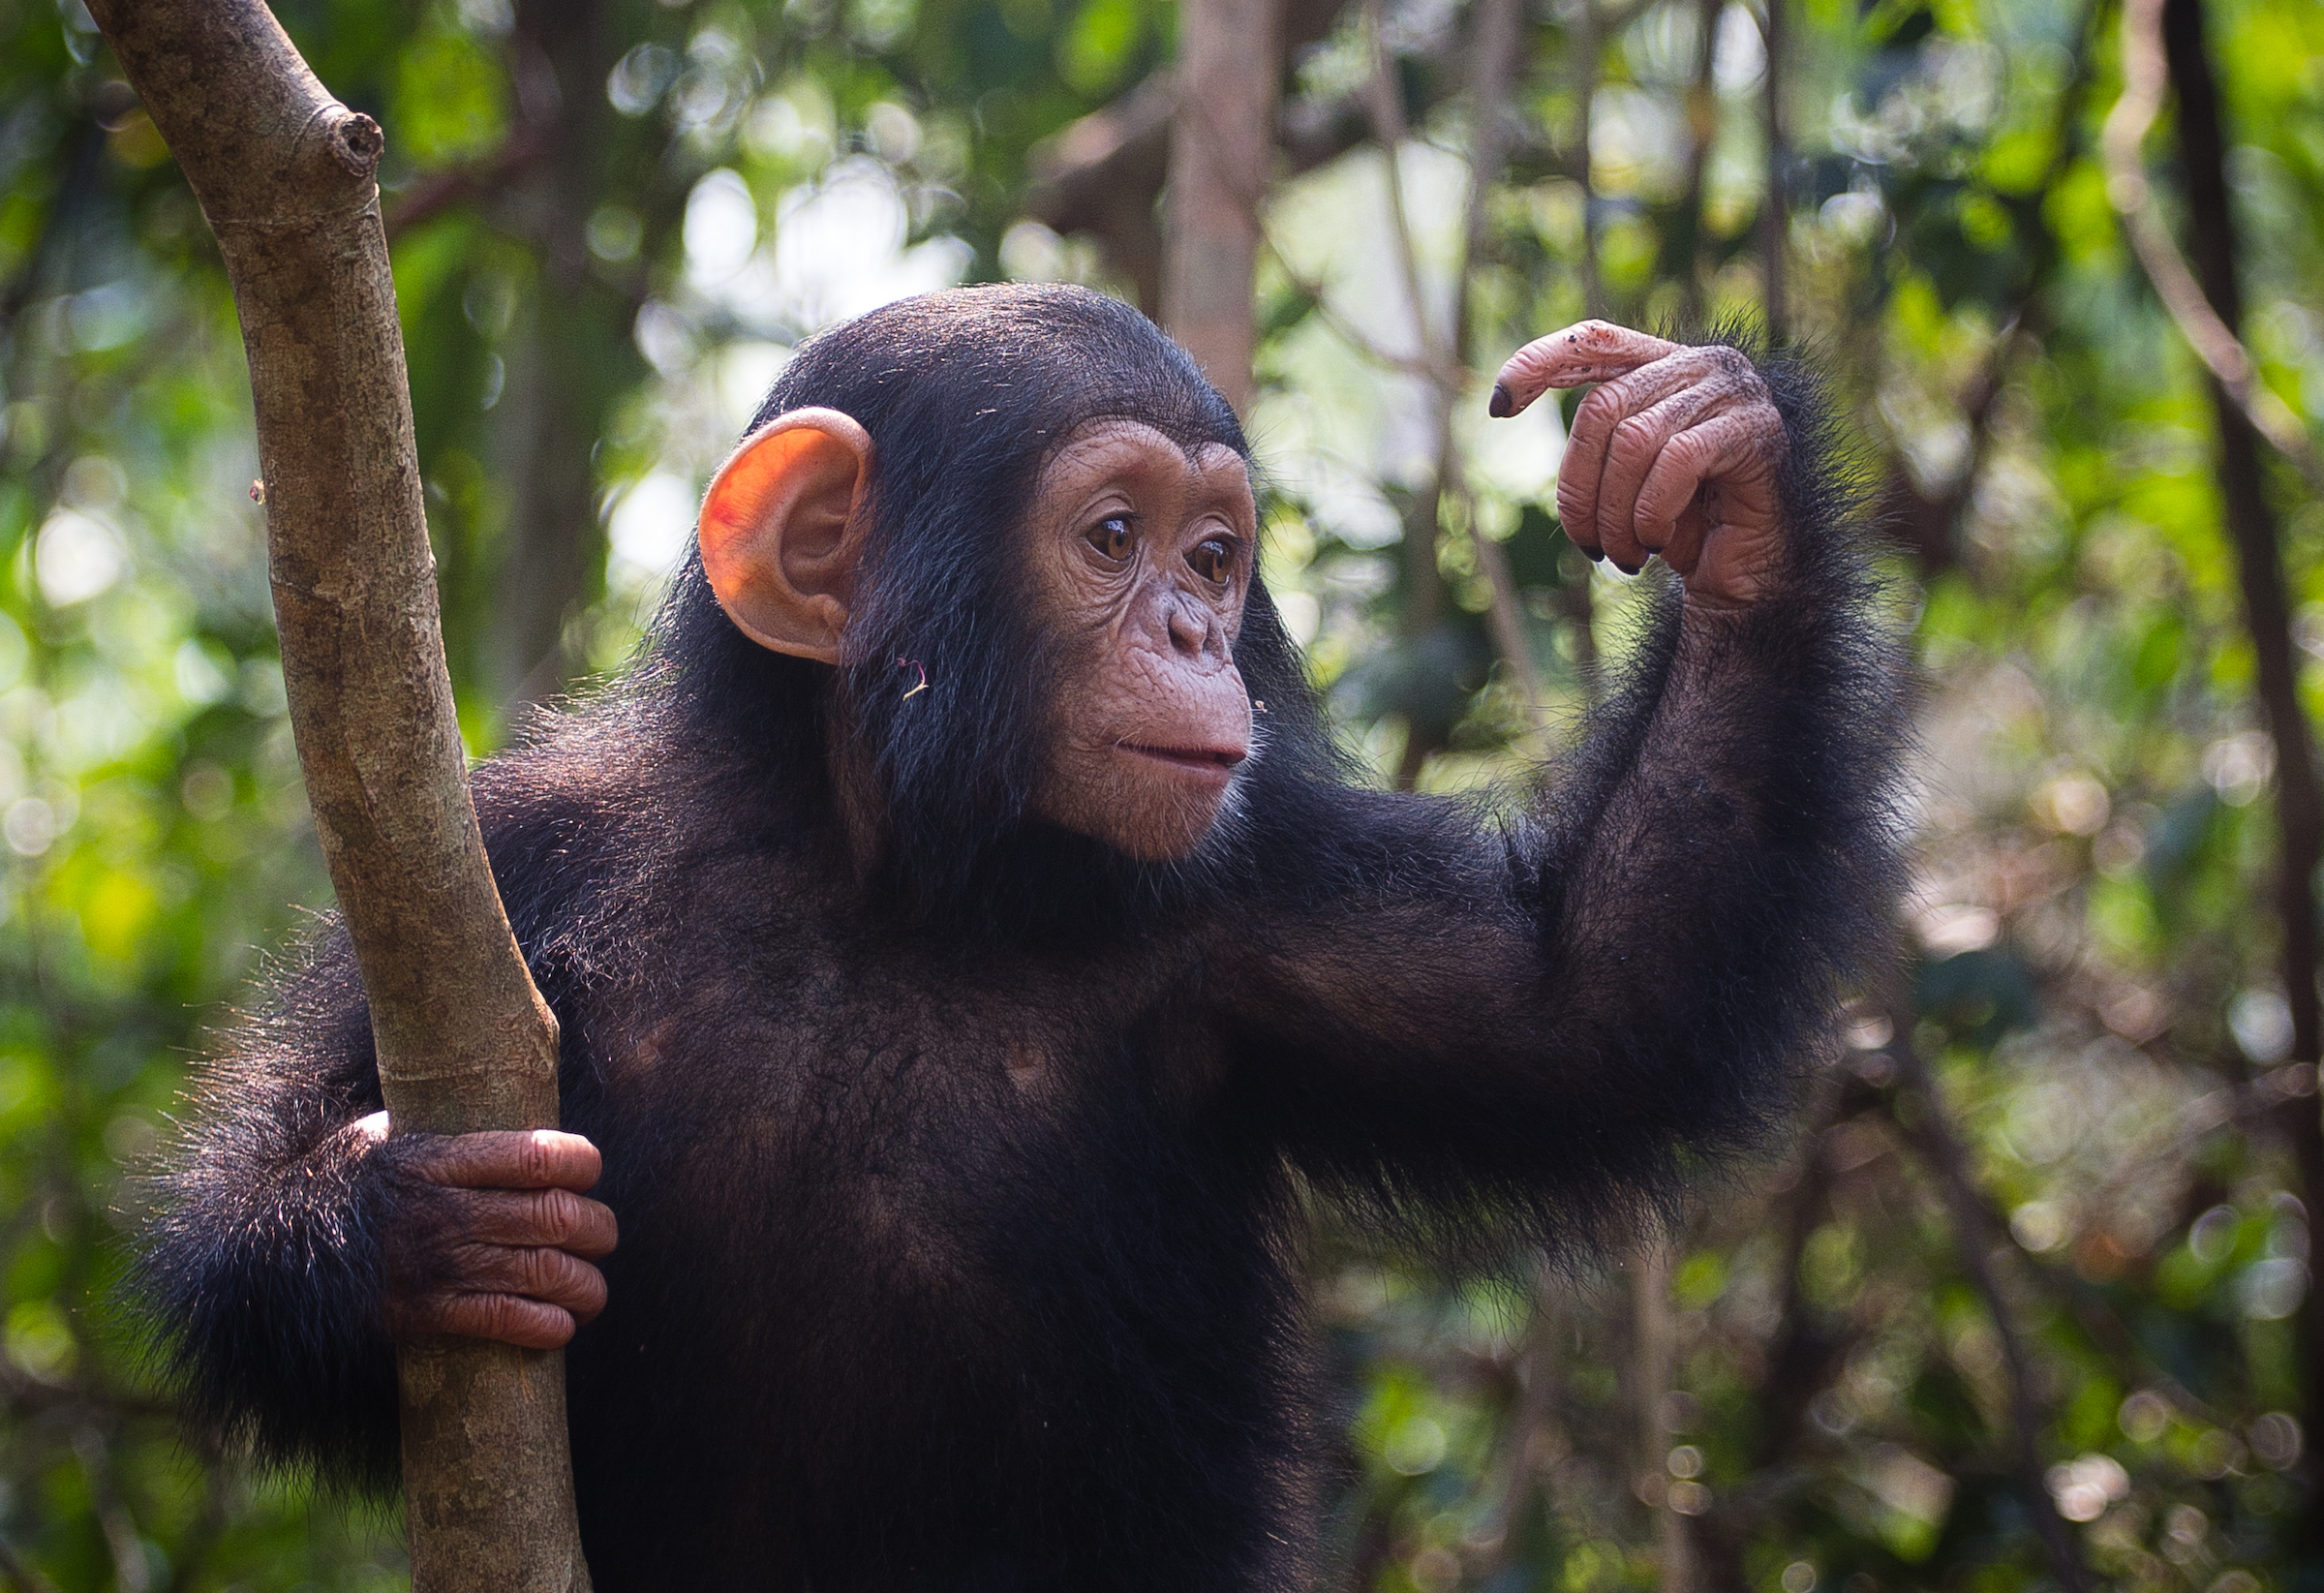 chimpanzee apes species human evolution humans female parasite genomes reveal malaria el read minds according medicine perelman projetogap br